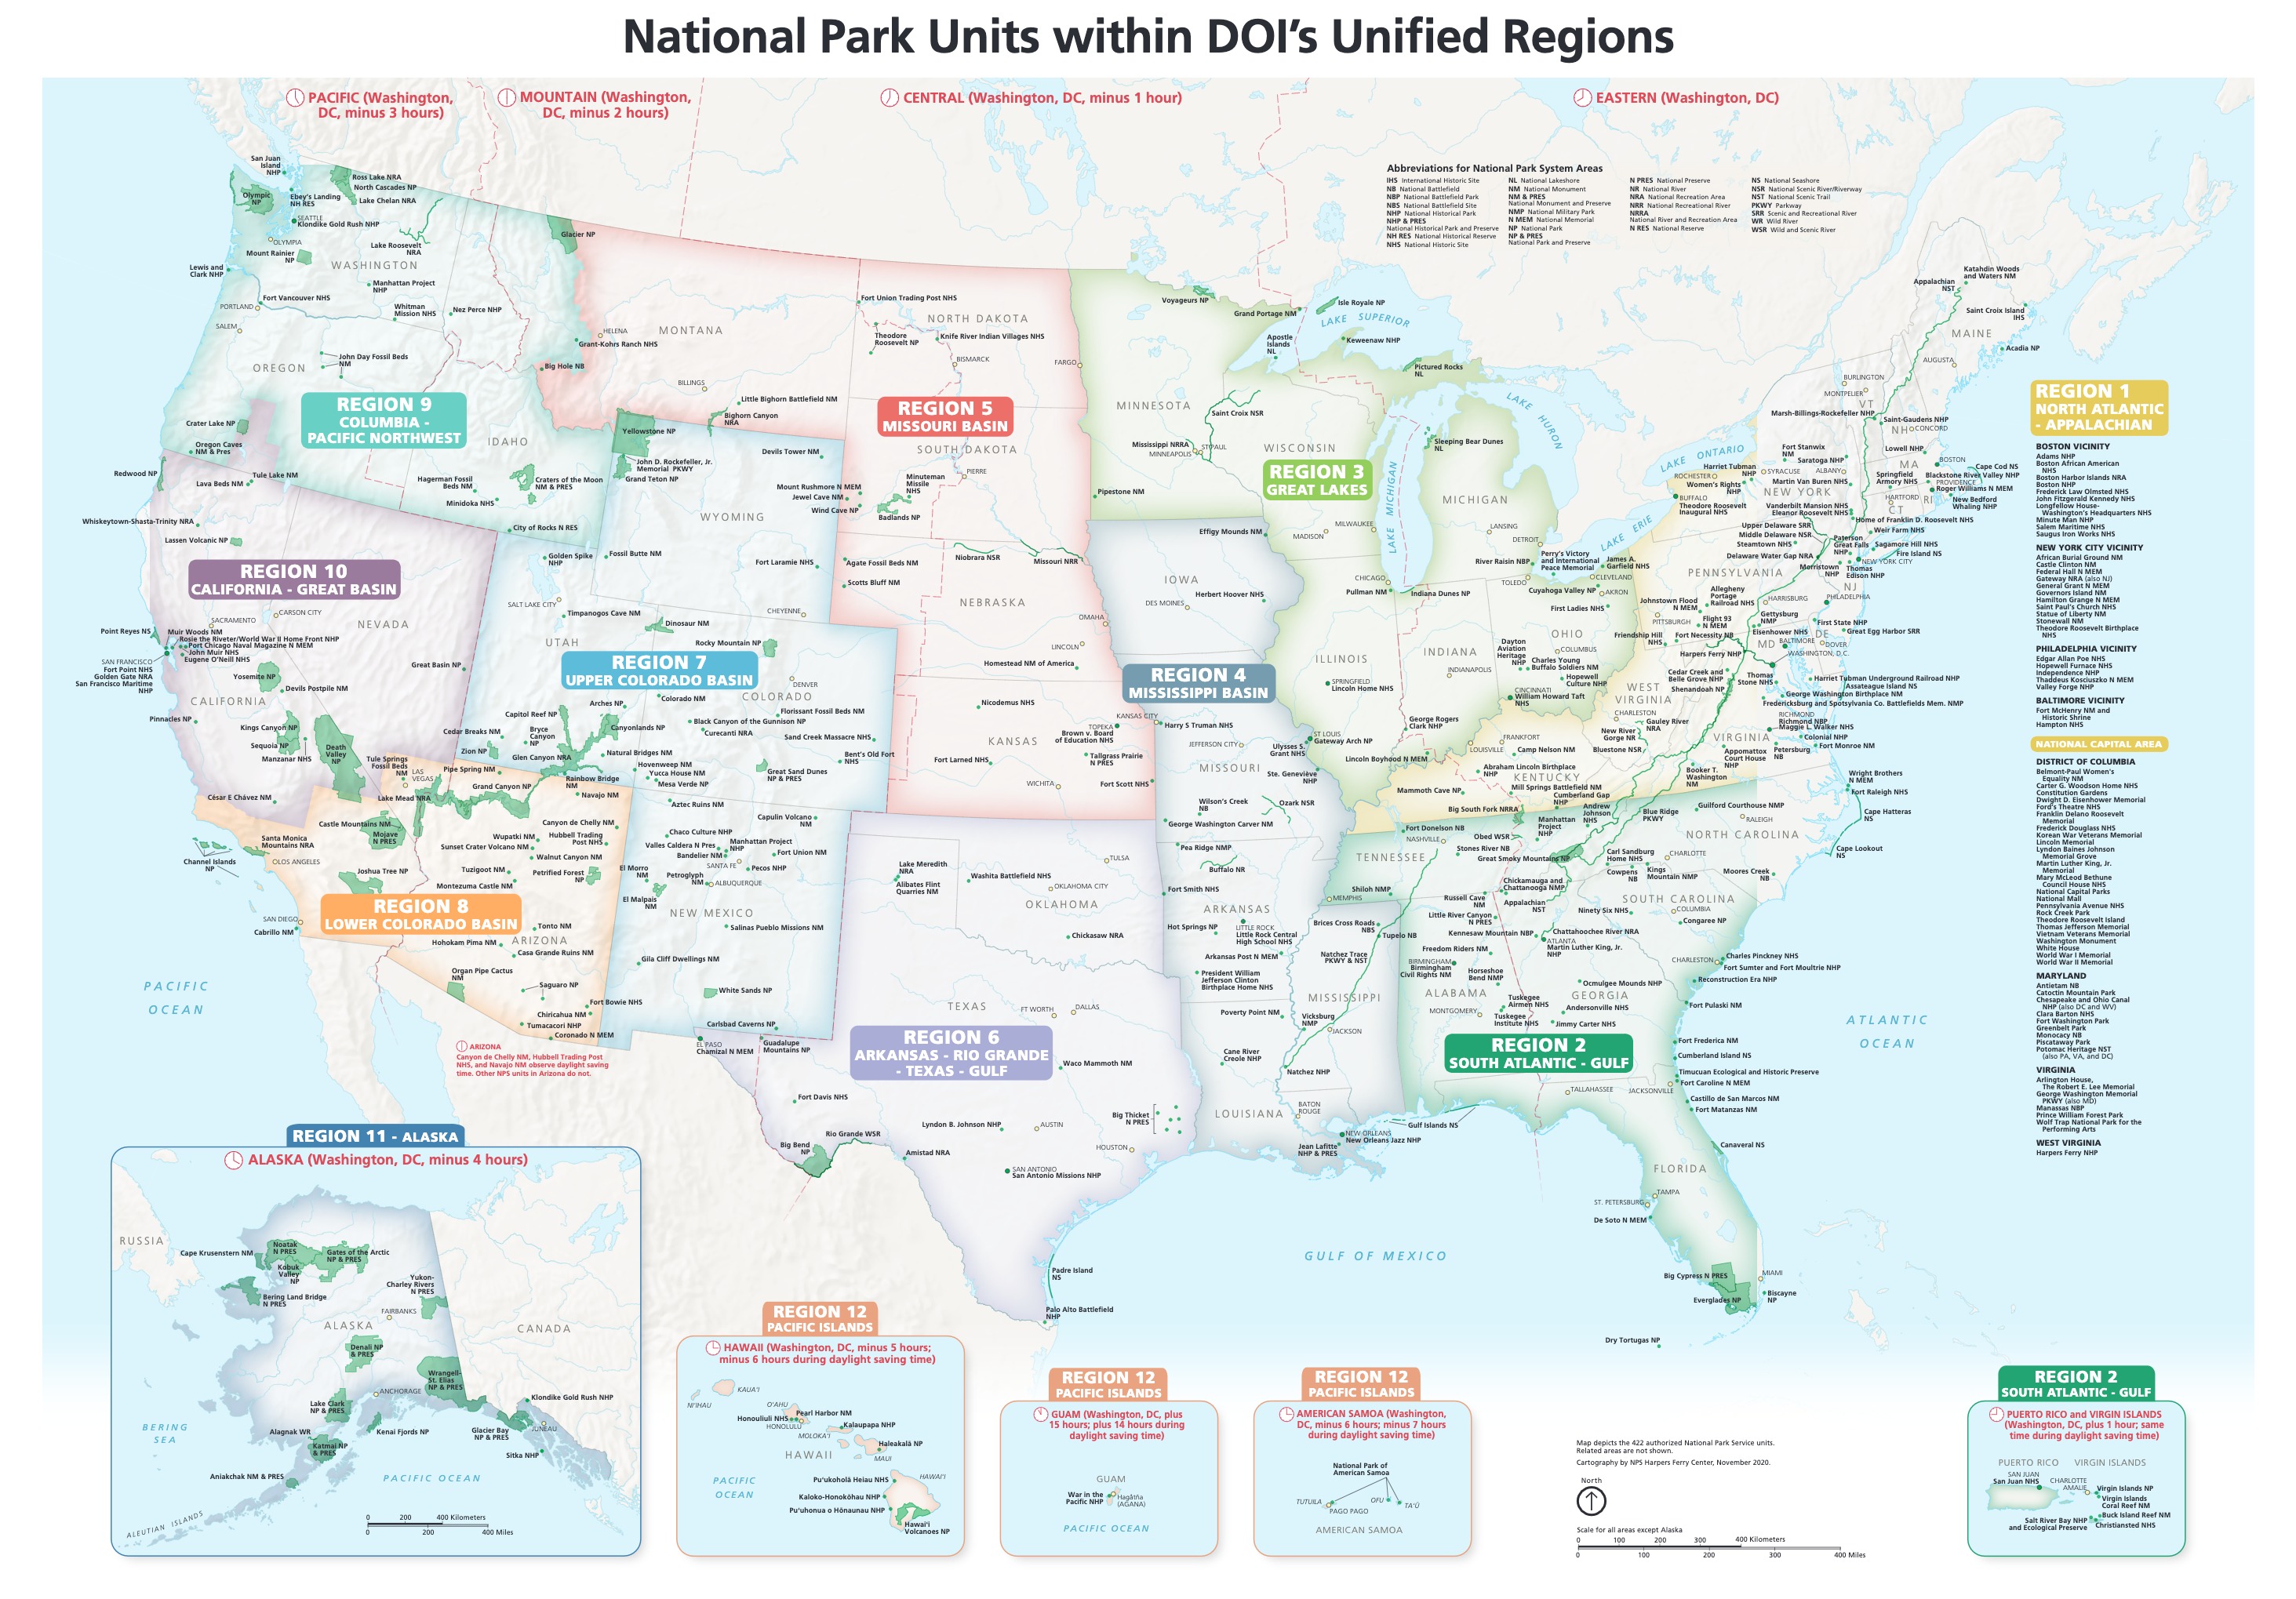 The NPS App - Digital (U.S. National Park Service)